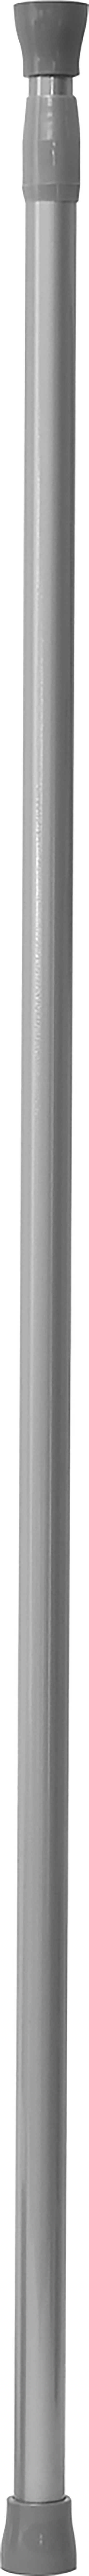 Barre de douche aluminium 110-200 cm - chrome